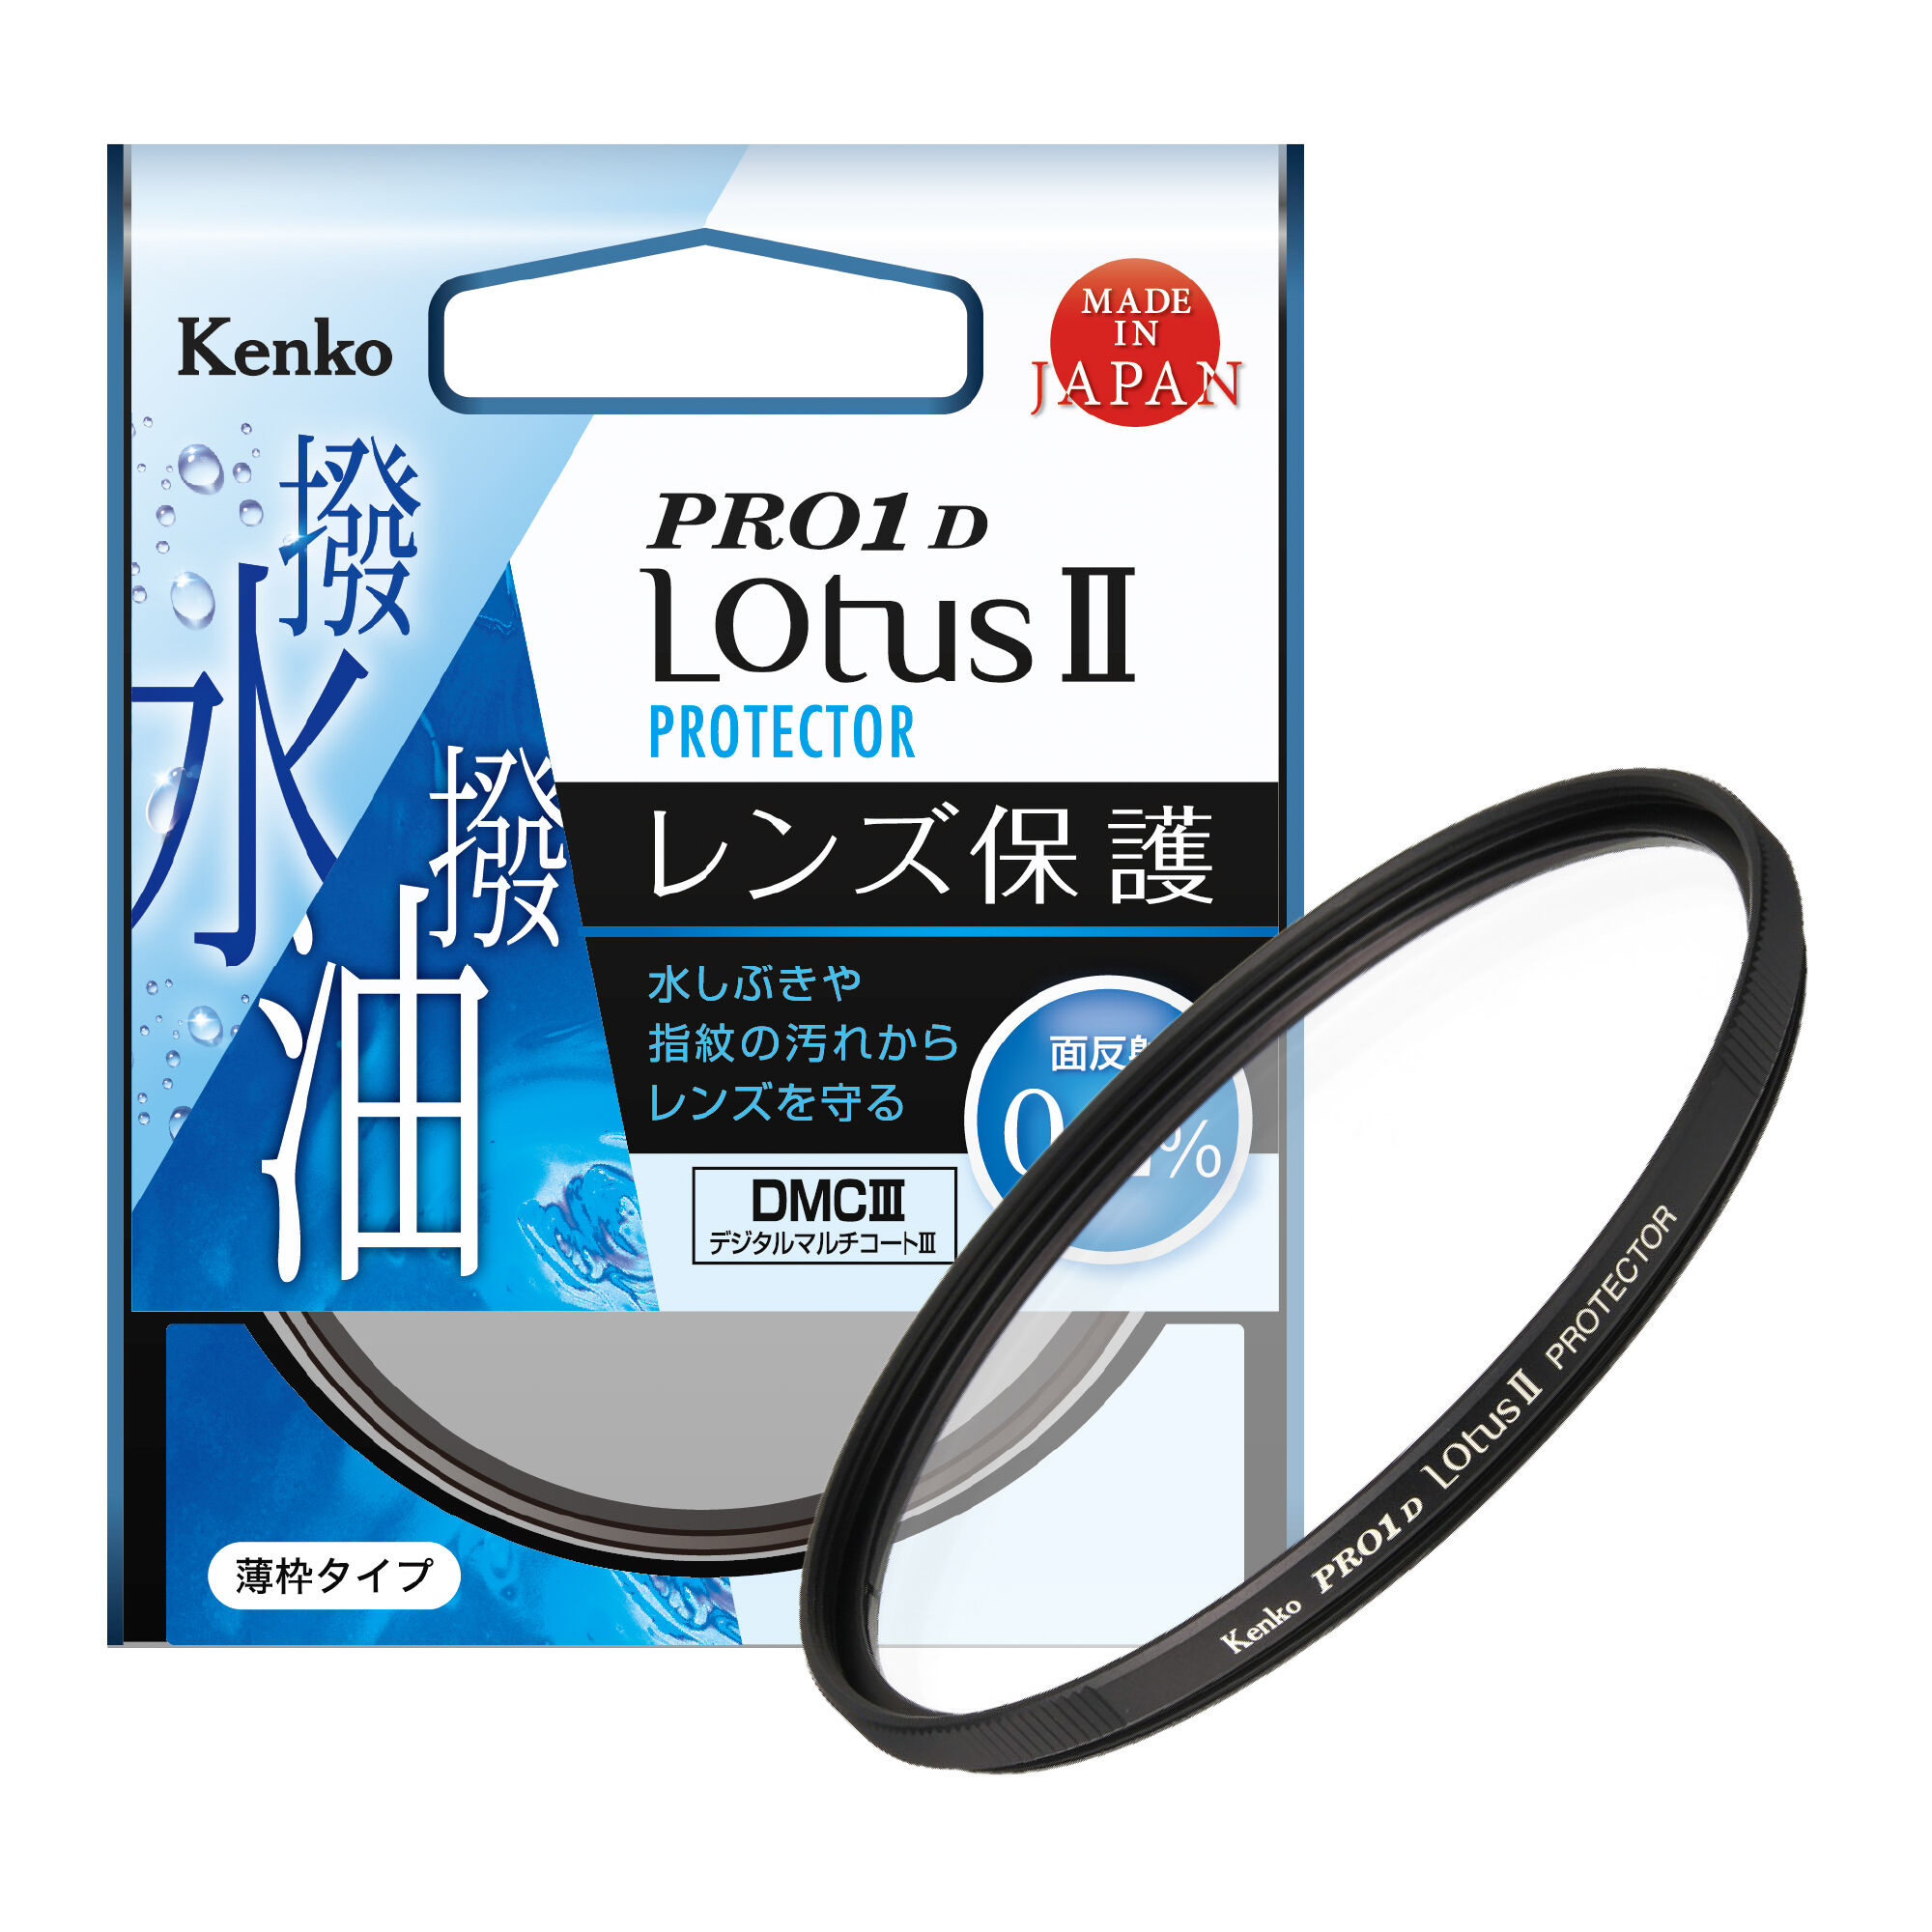 PRO1D LotusⅡ プロテクター | ケンコー・トキナー